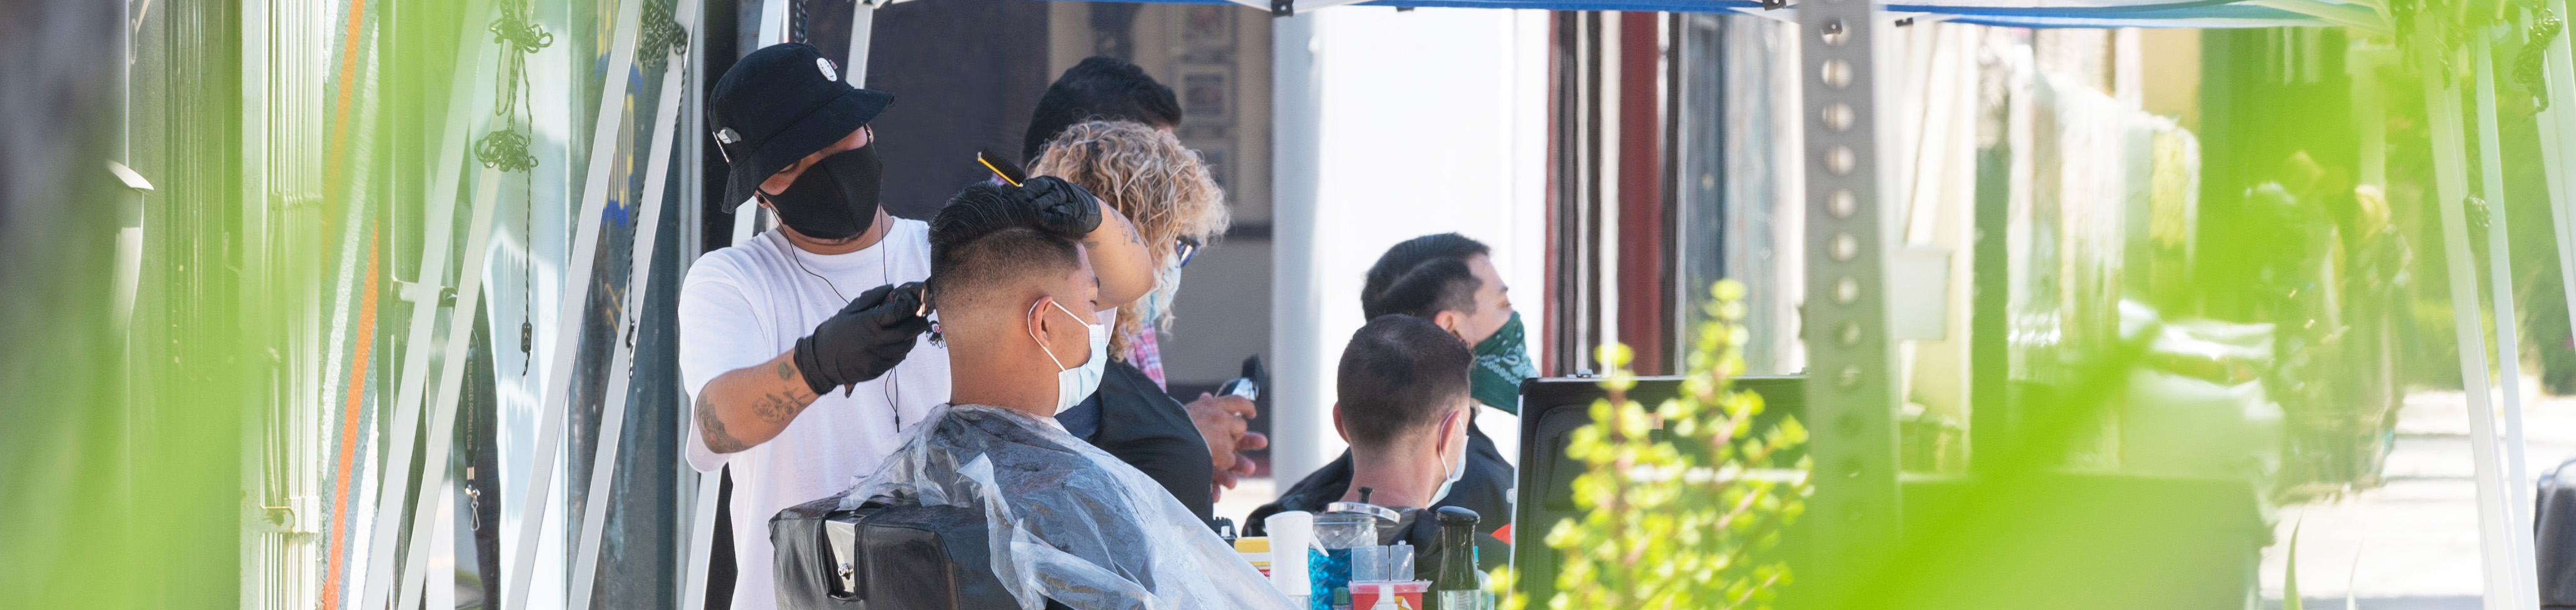 outdoor hair salons